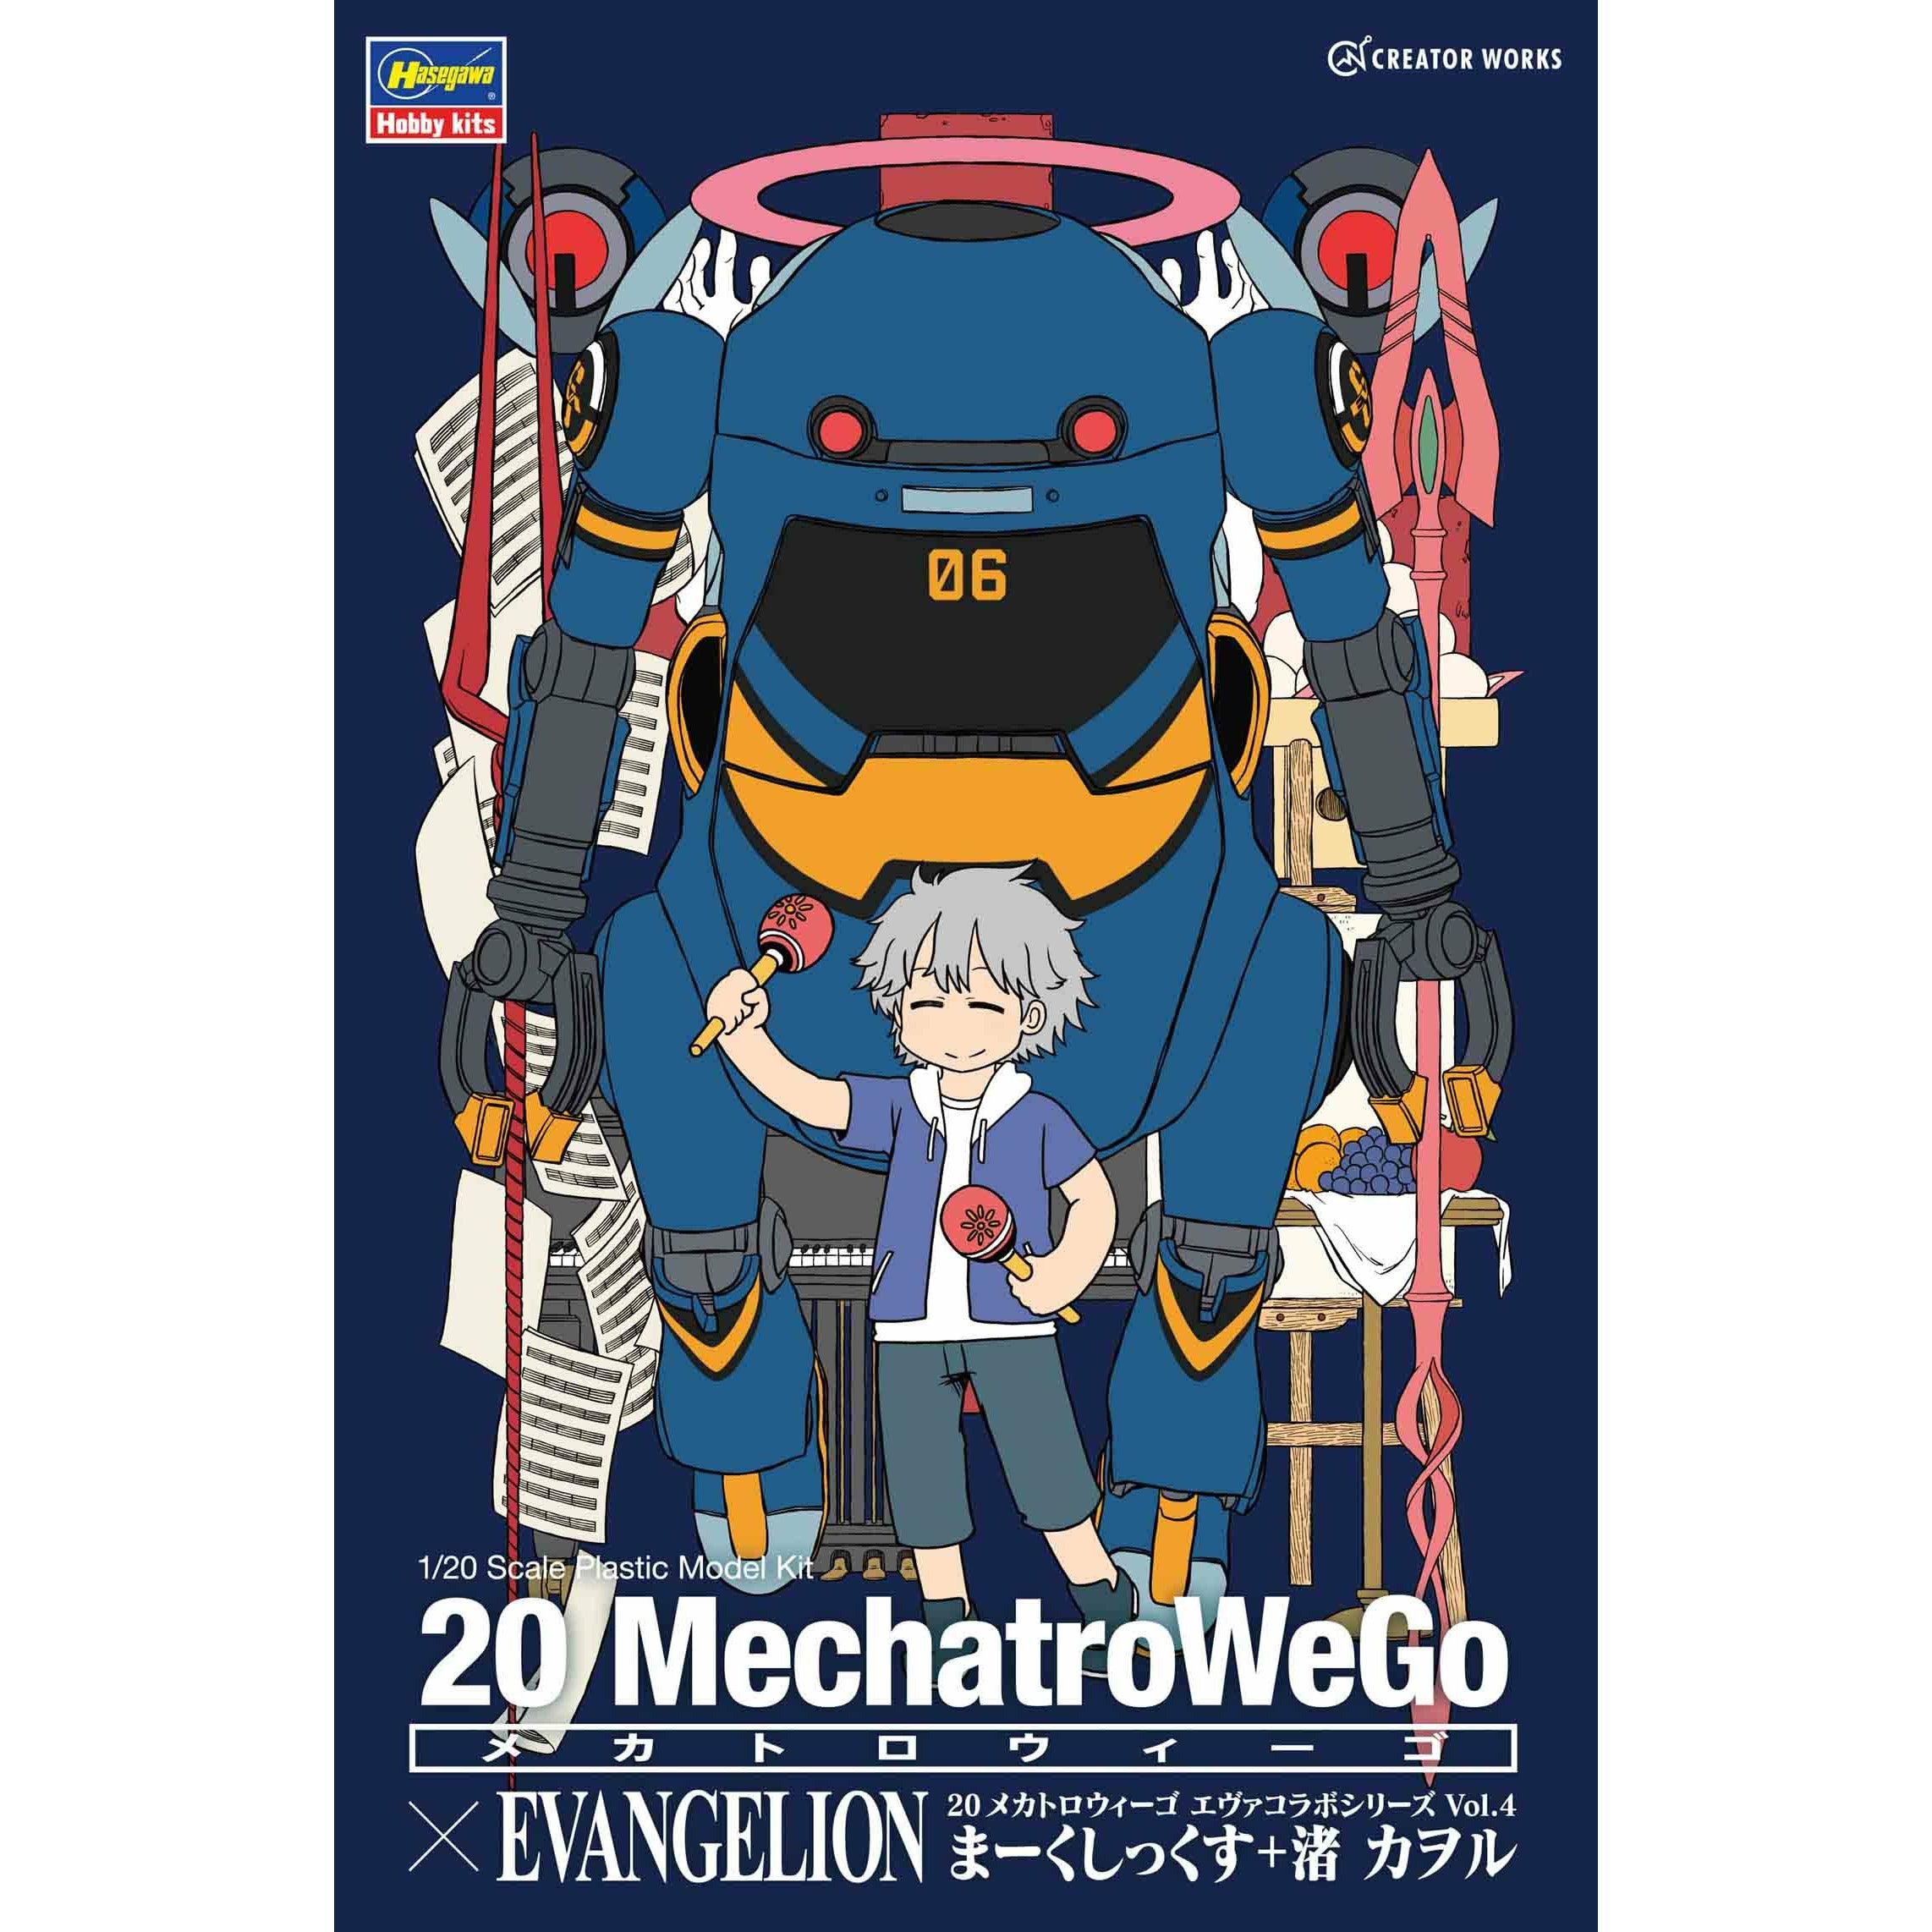 MechatroWeGo Evangelion Collab Series Vol.4 'Mk.6' + Kaoru Nagisa 1/20 #52310 by Hasegawa